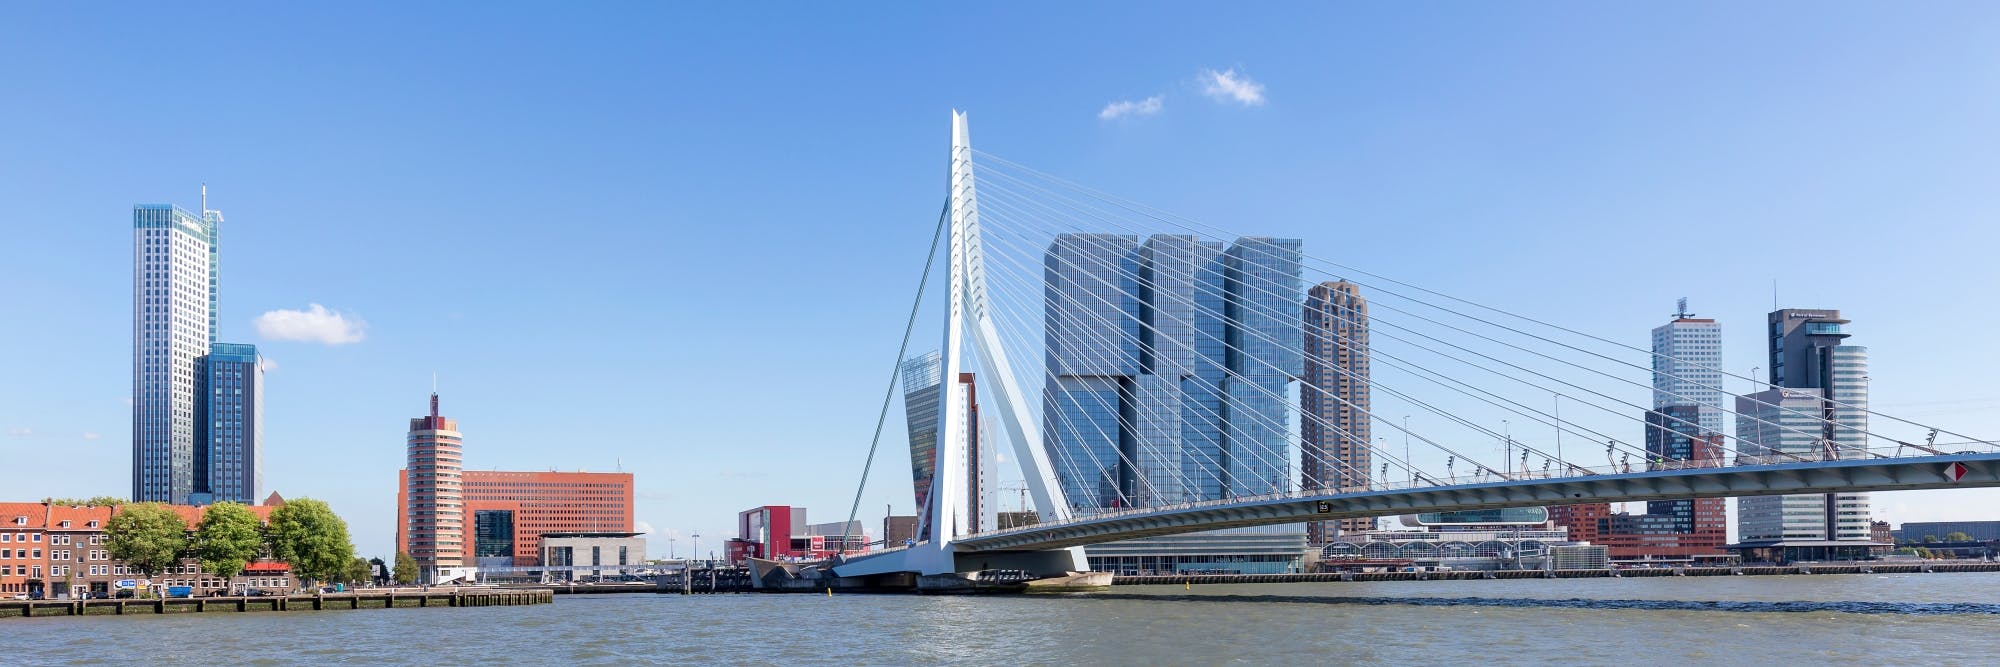 Rotterdam self-guided audio tour Musement